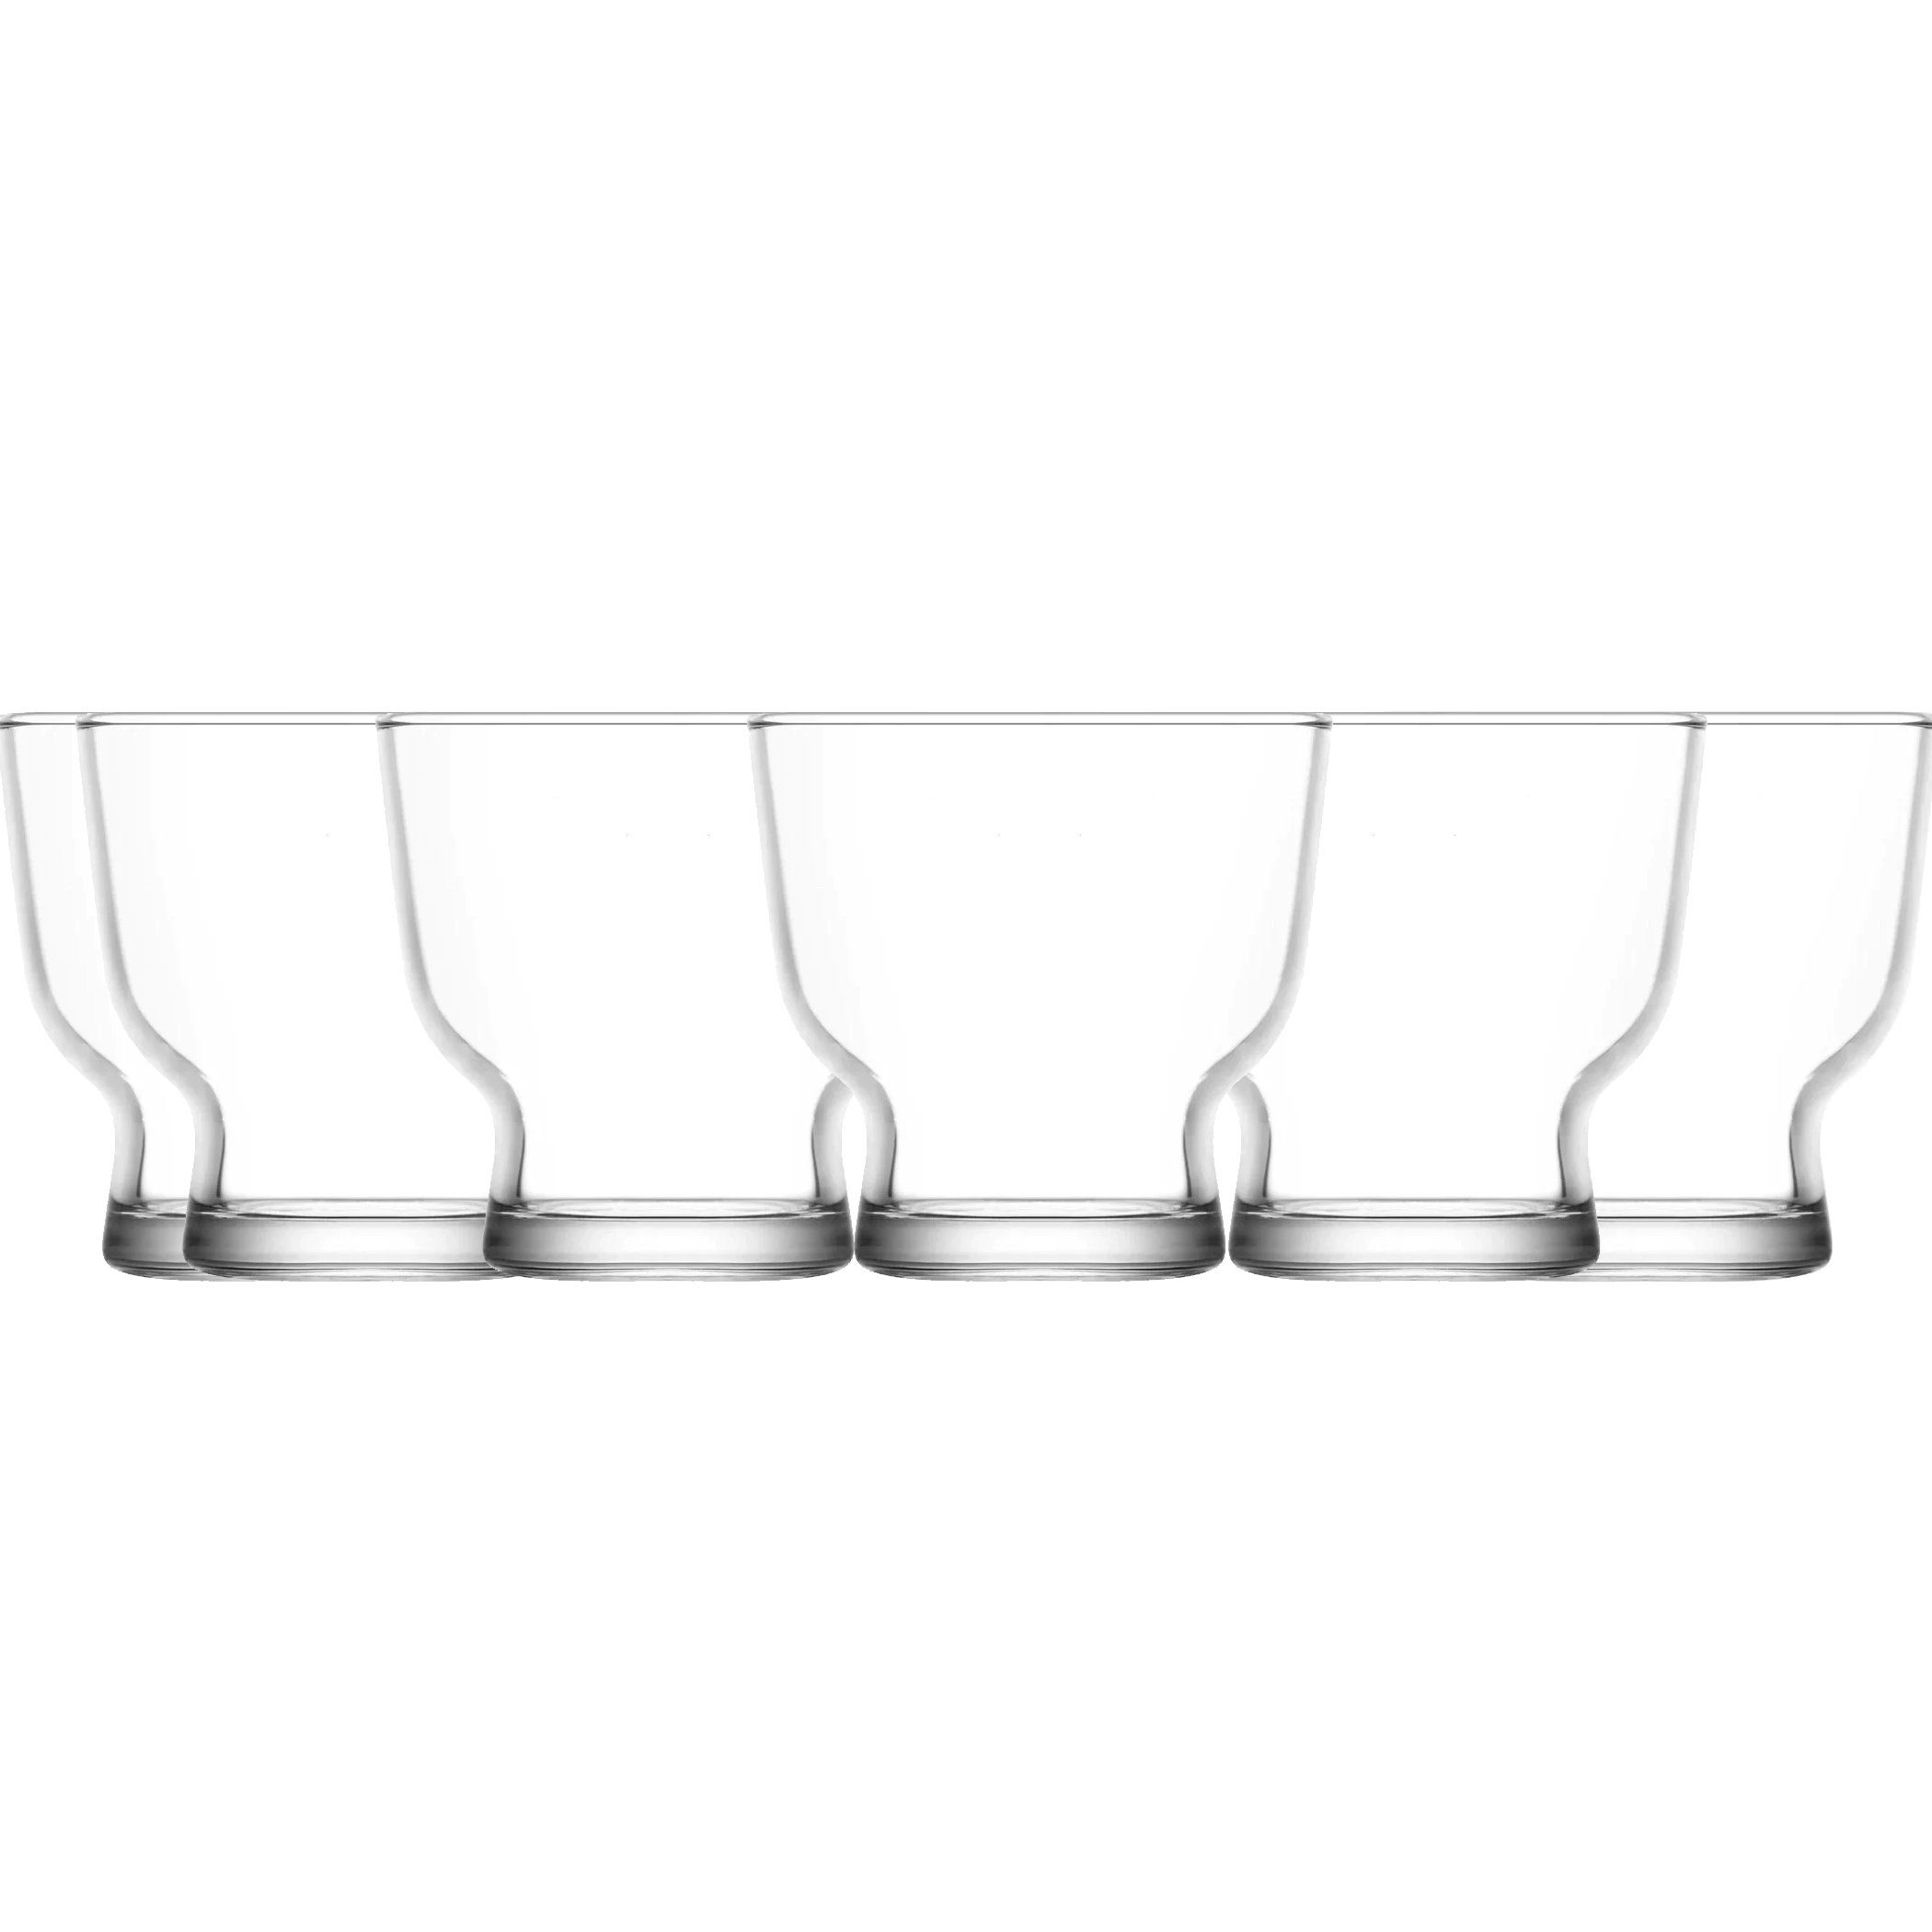 LAV Glas Gläser Set 6 teilig PET381 Dessertglas 240 ml, Trinkgläser Set, Glas, Spülmaschinenfest